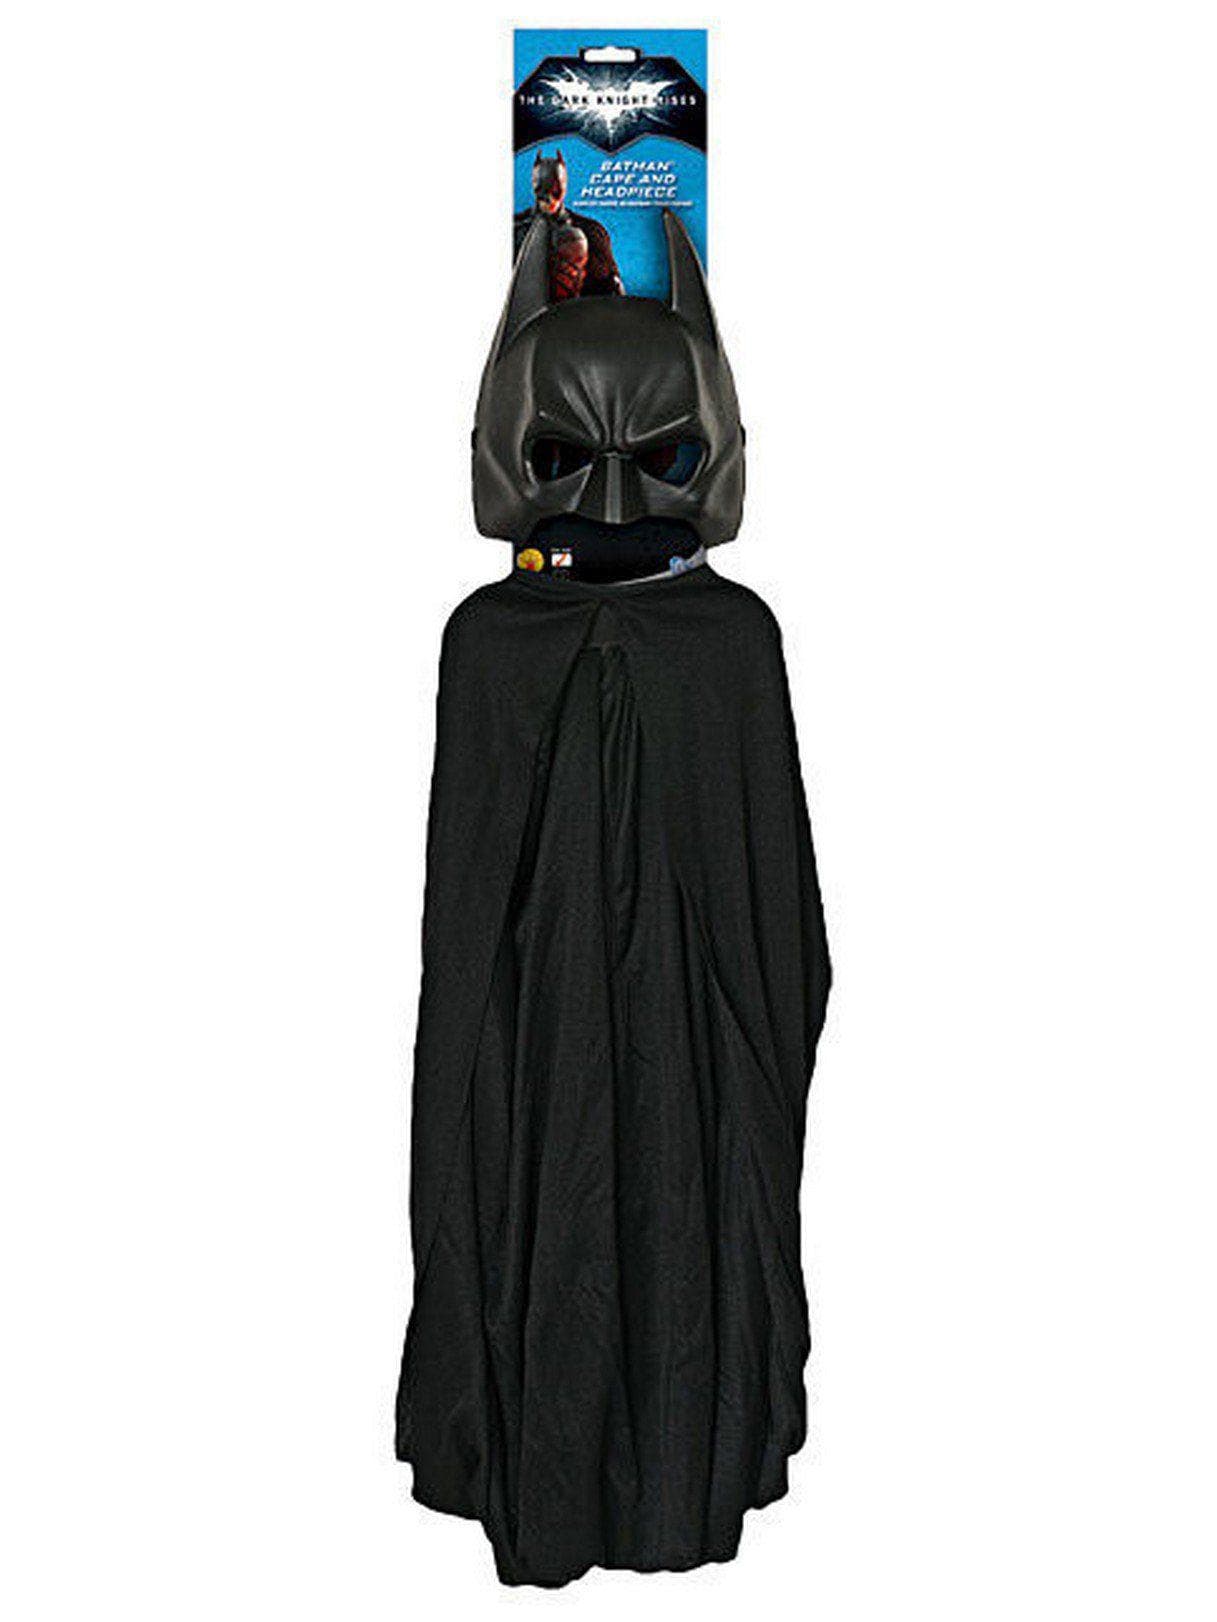 Adult The Dark Knight Rises Batman Cape and Mask - costumes.com